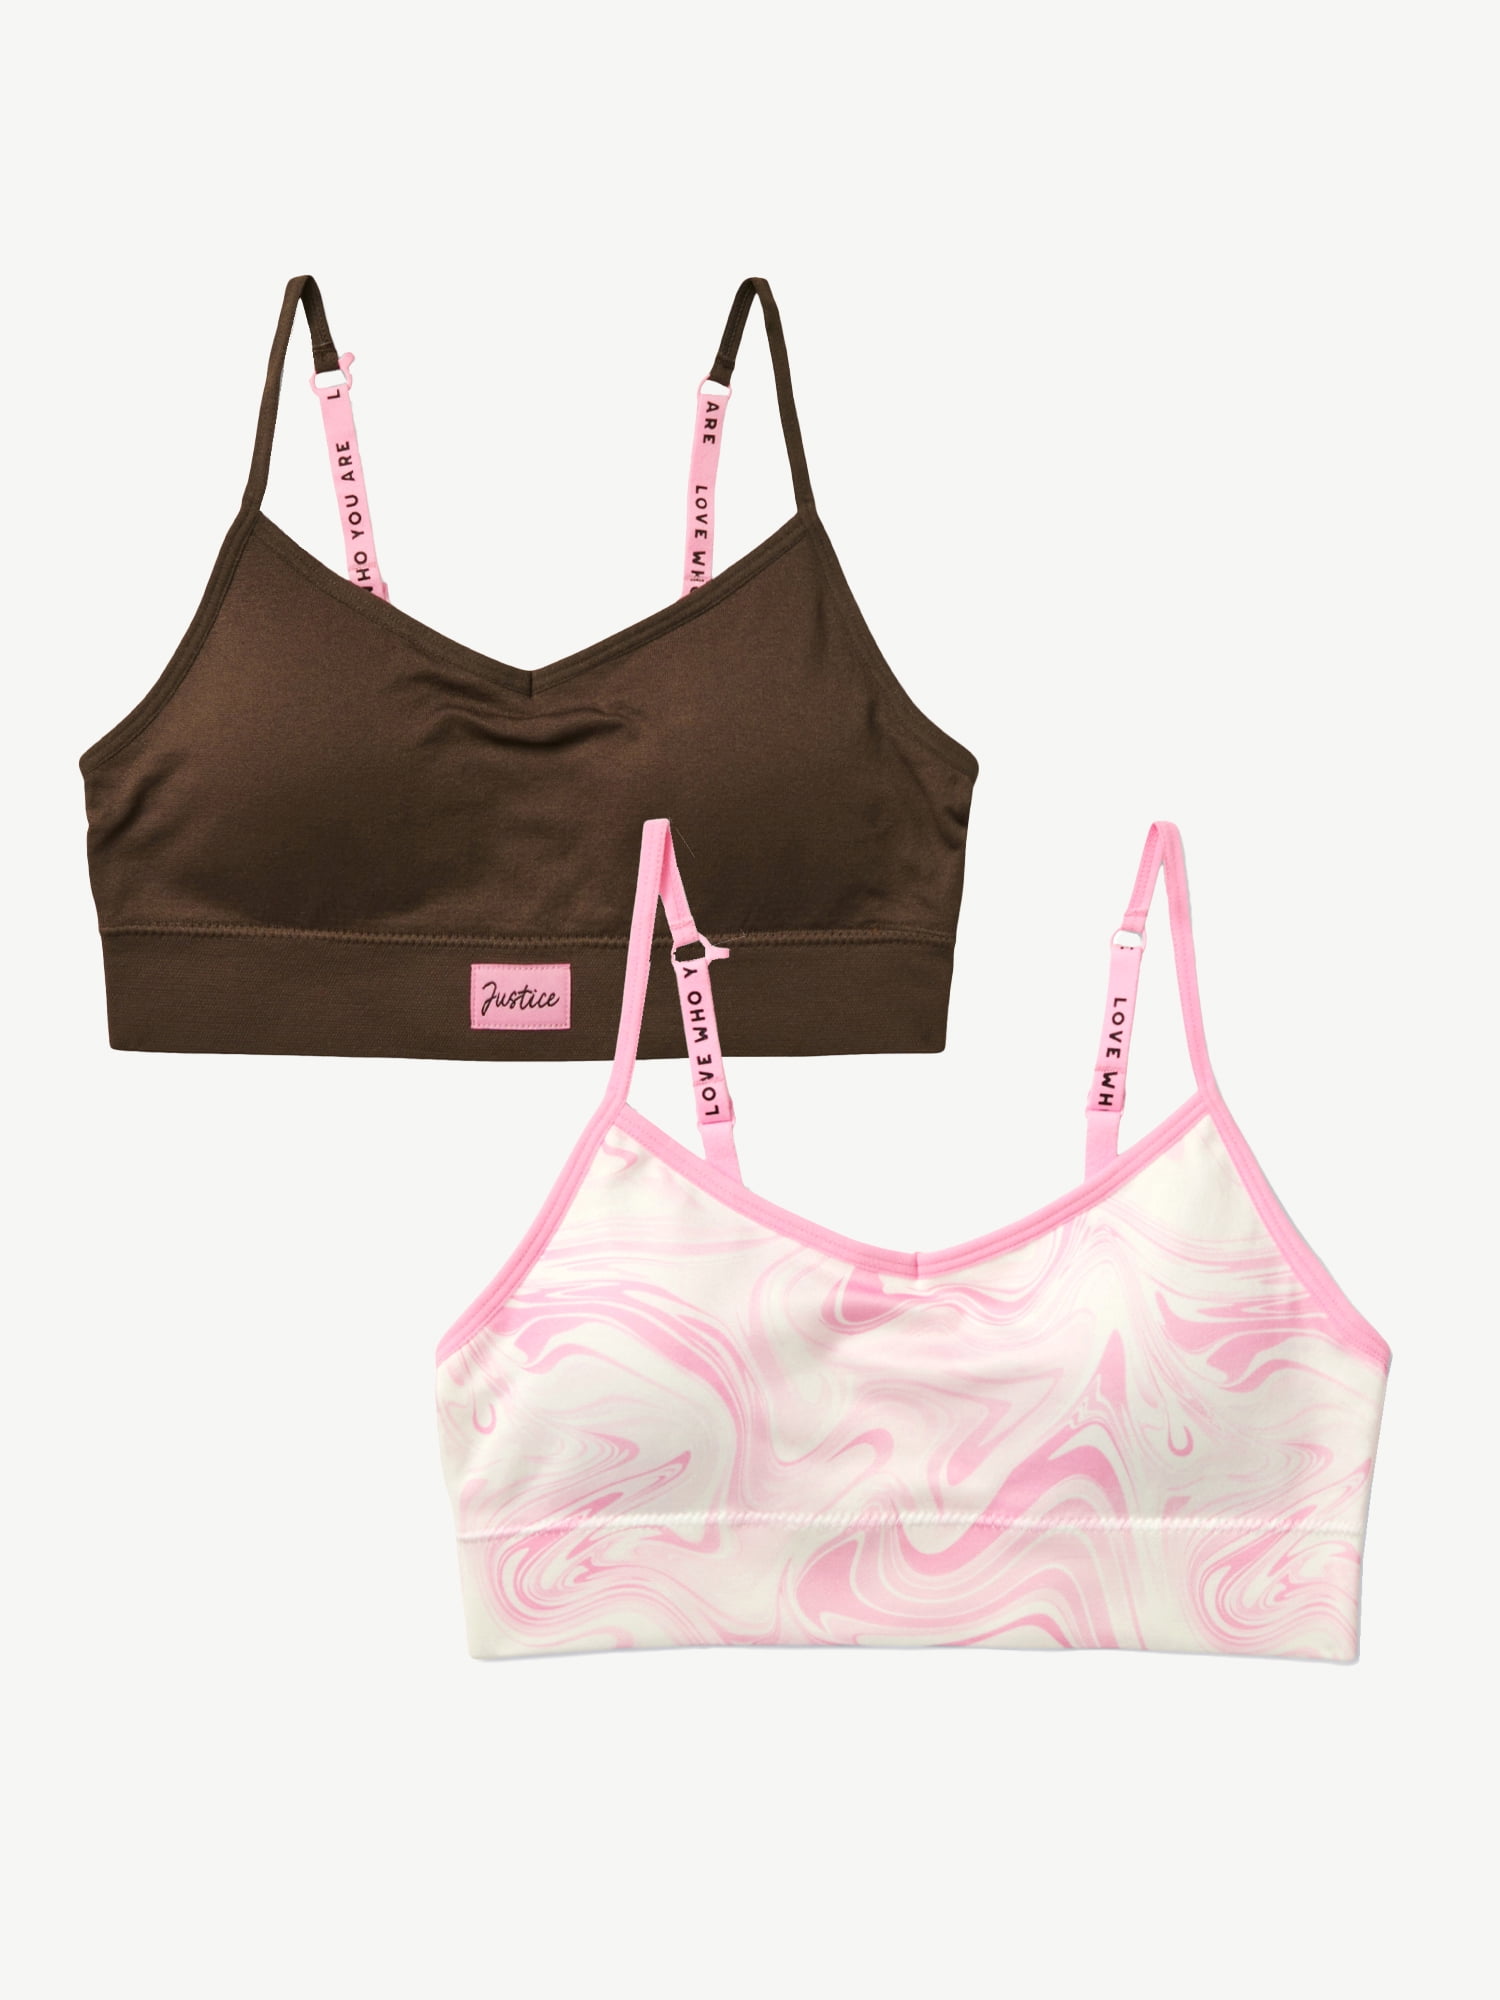 Brands that offer 28 C/D bras? : r/ABraThatFits